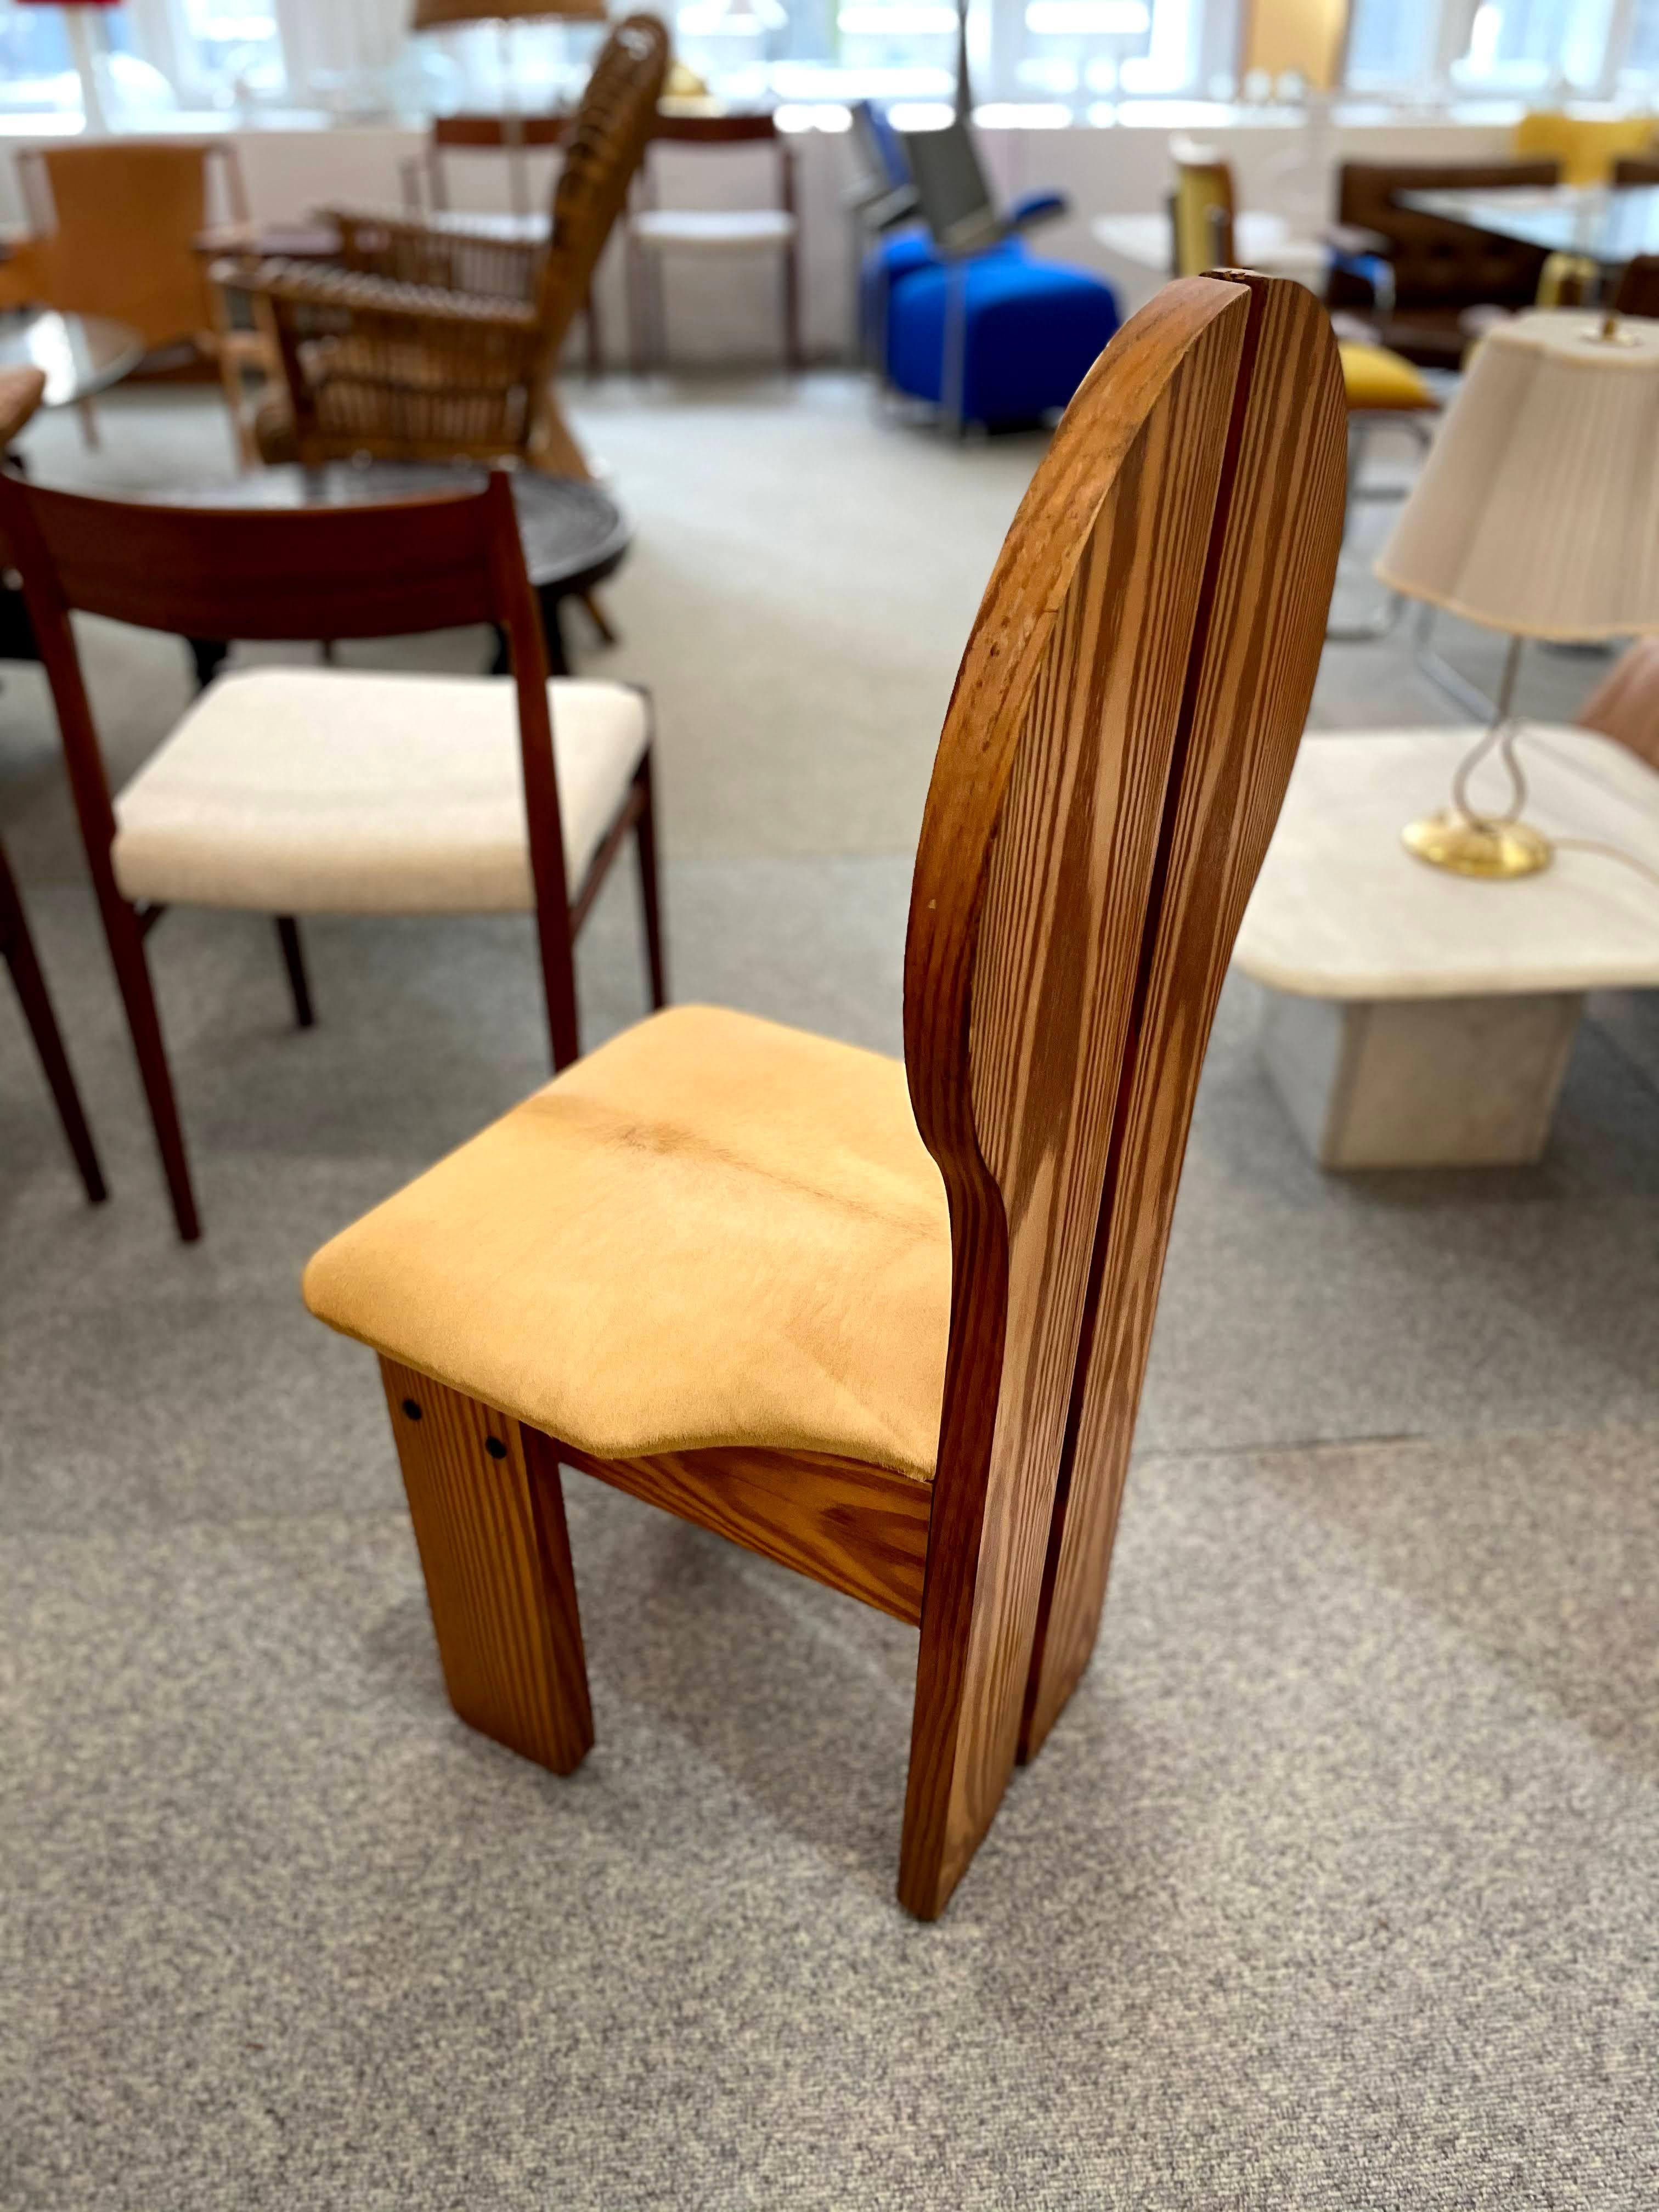 Late 20th Century Hungarian Ponyskin Upholstered Studio Craft Chair in Organic Design, 1970